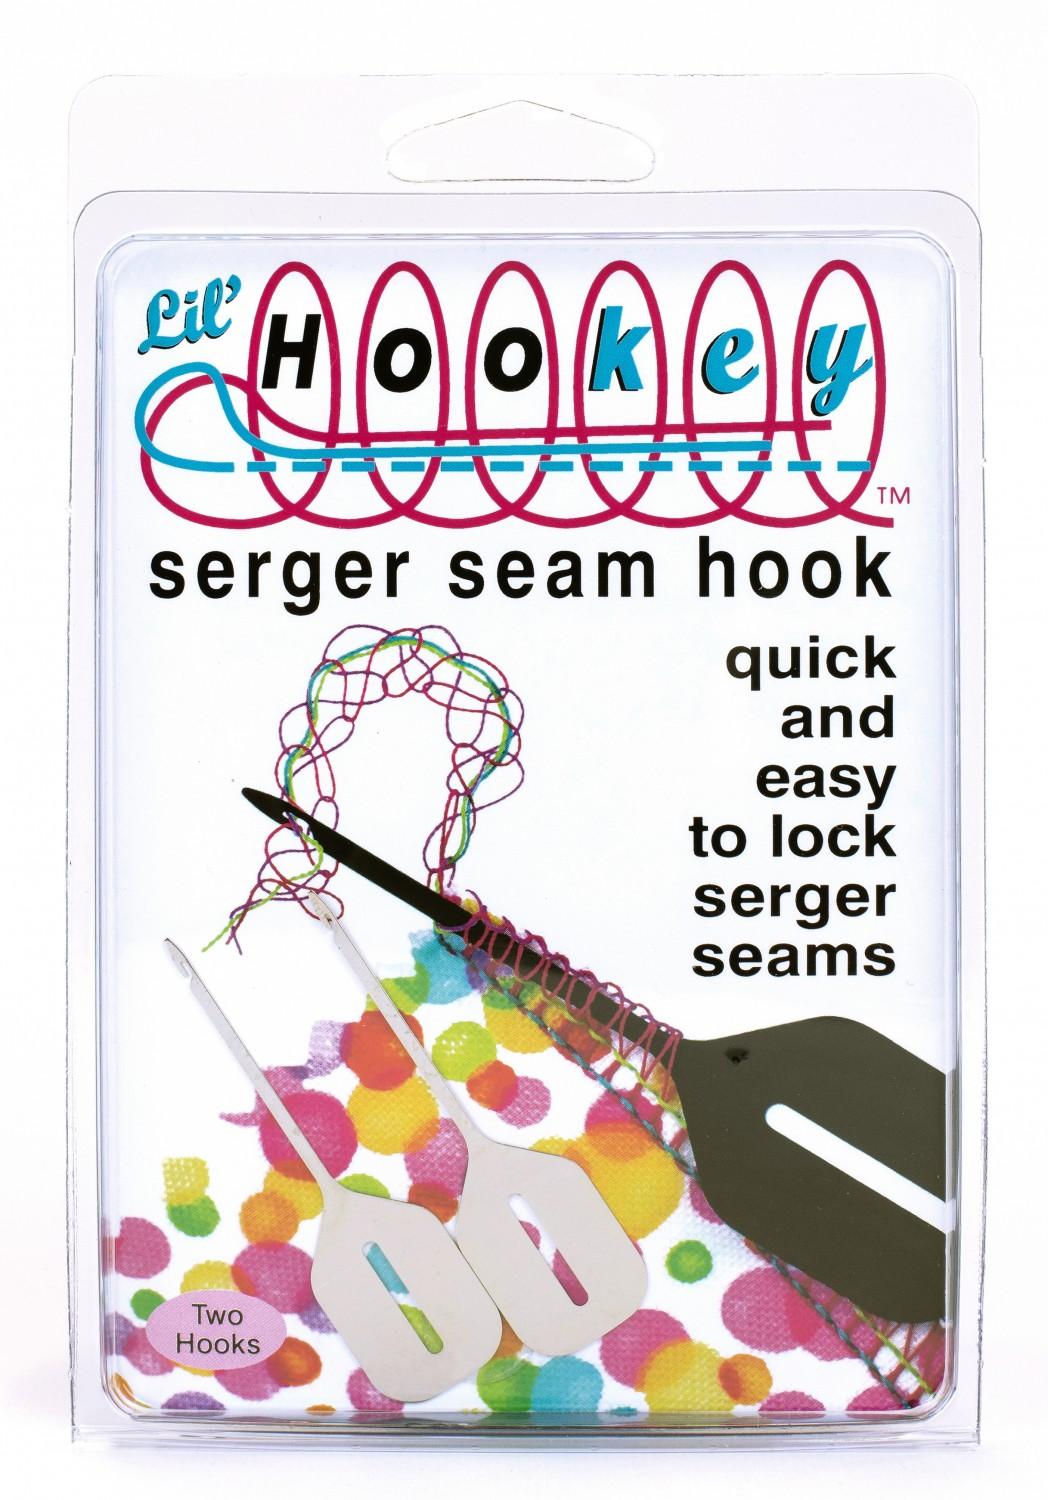 Hookey Serger Seam Hook